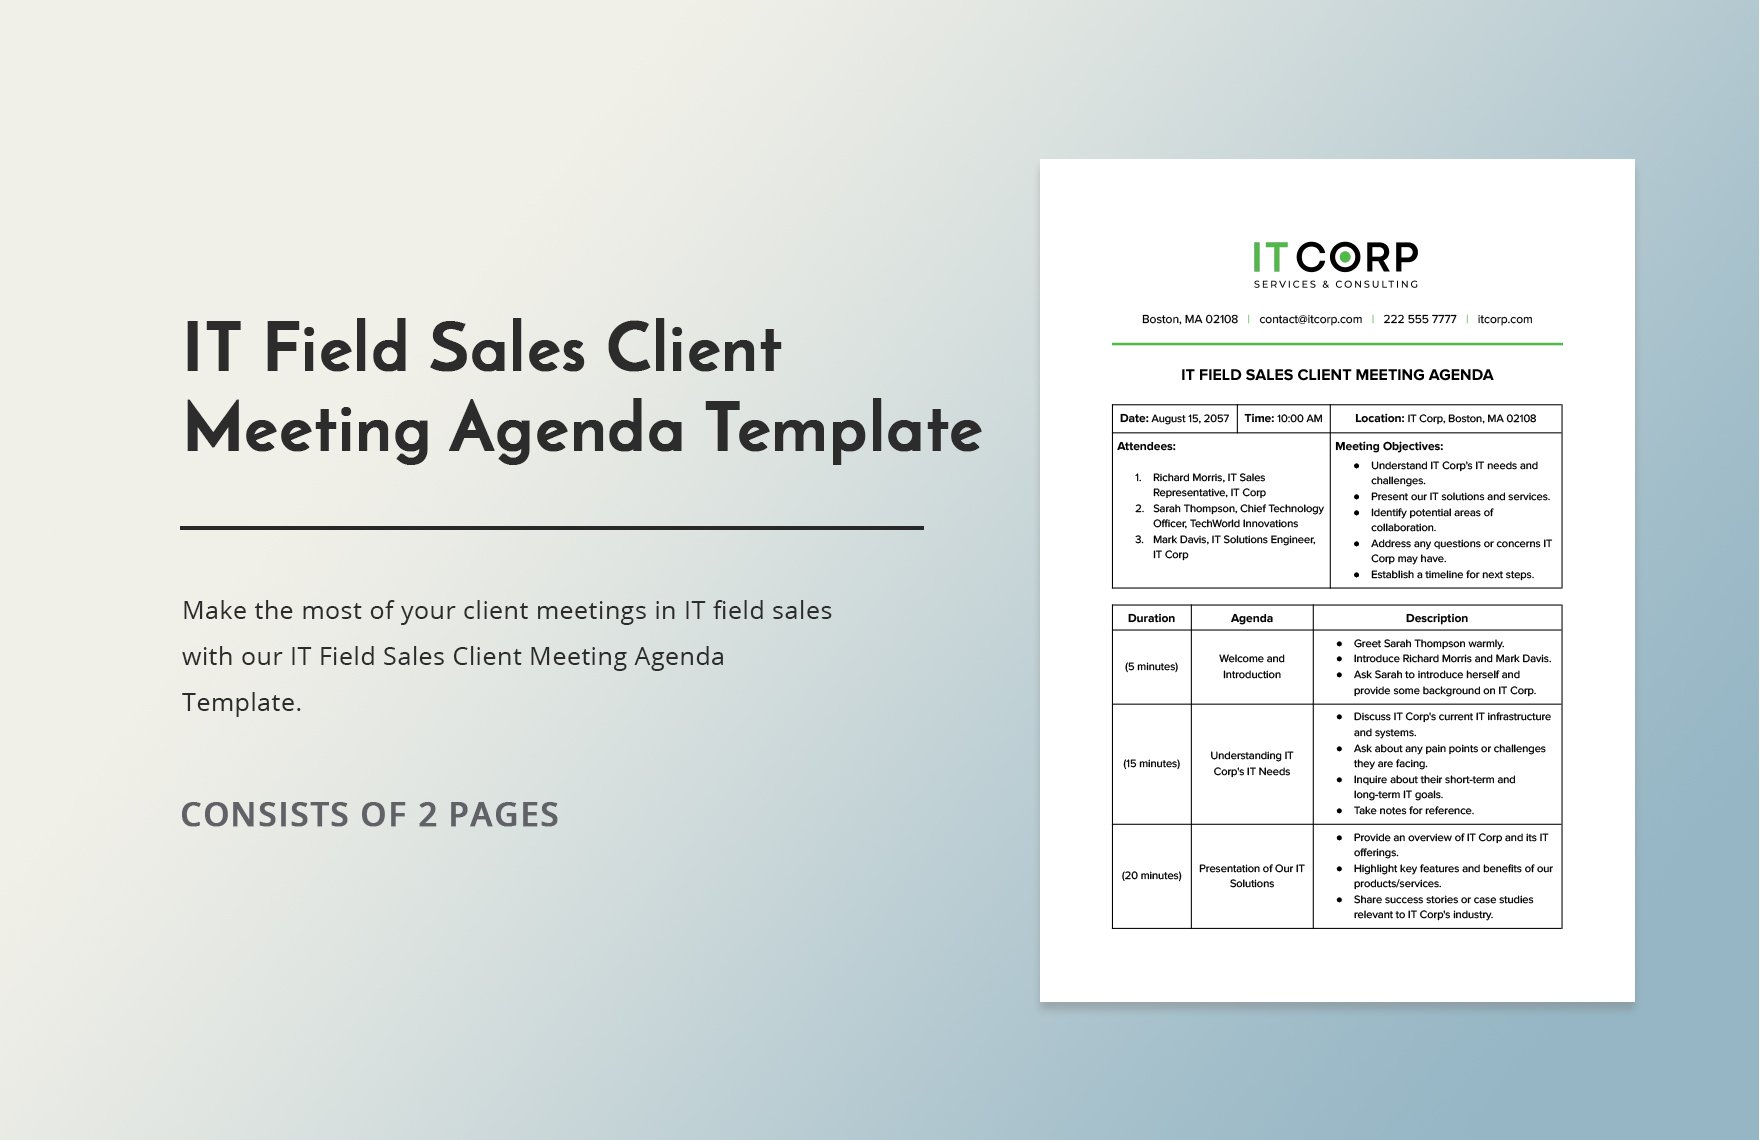 IT Field Sales Client Meeting Agenda Template